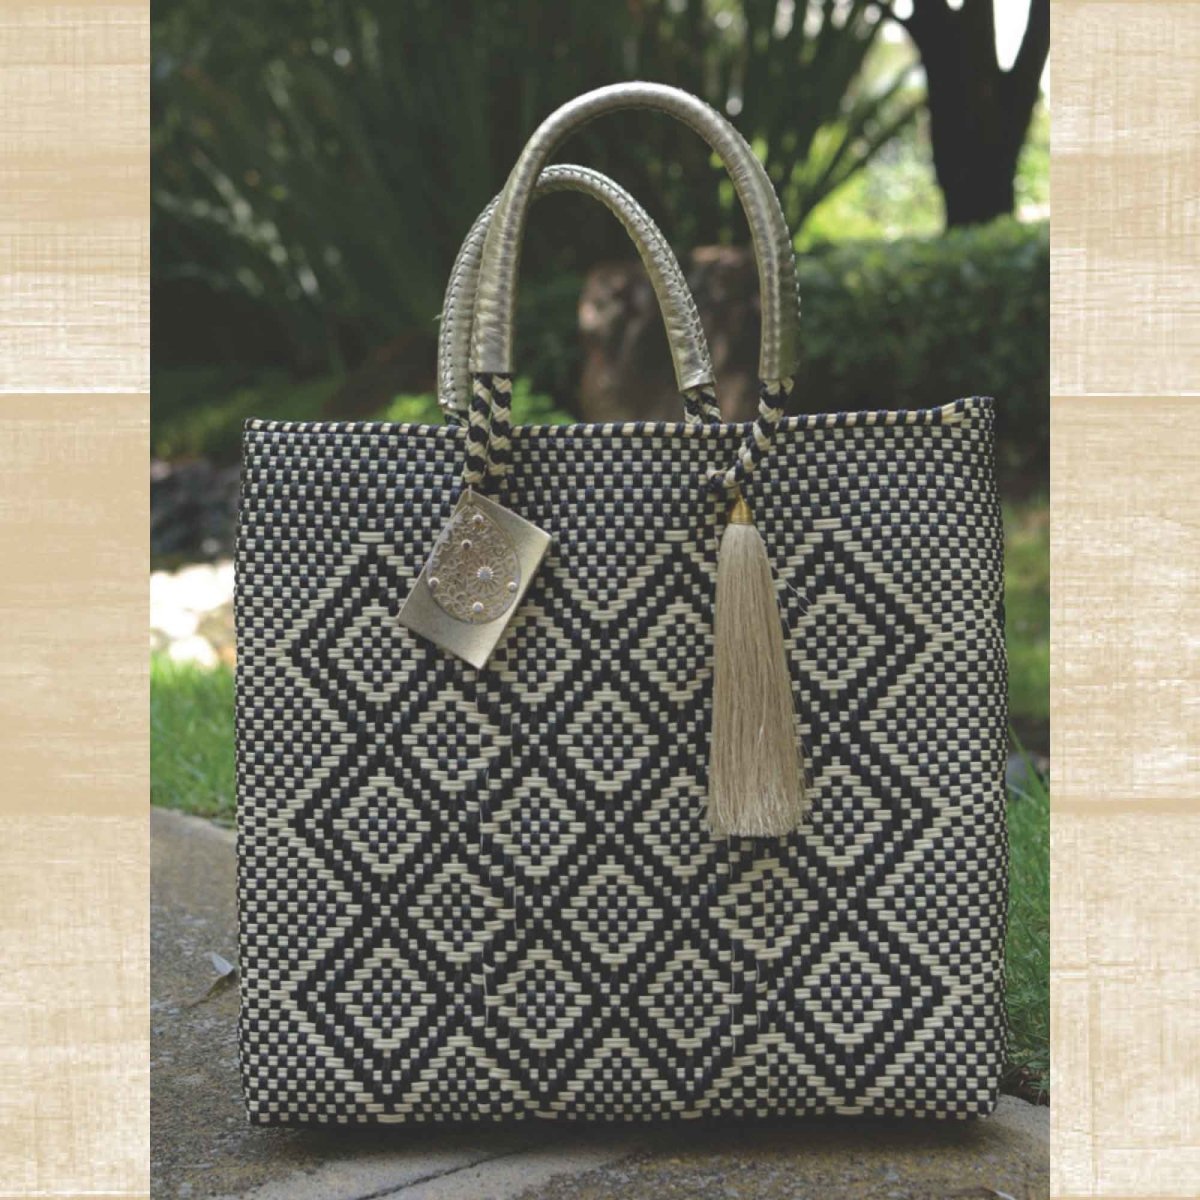 Handmade Artesanal handbag - CharroAzteca.com